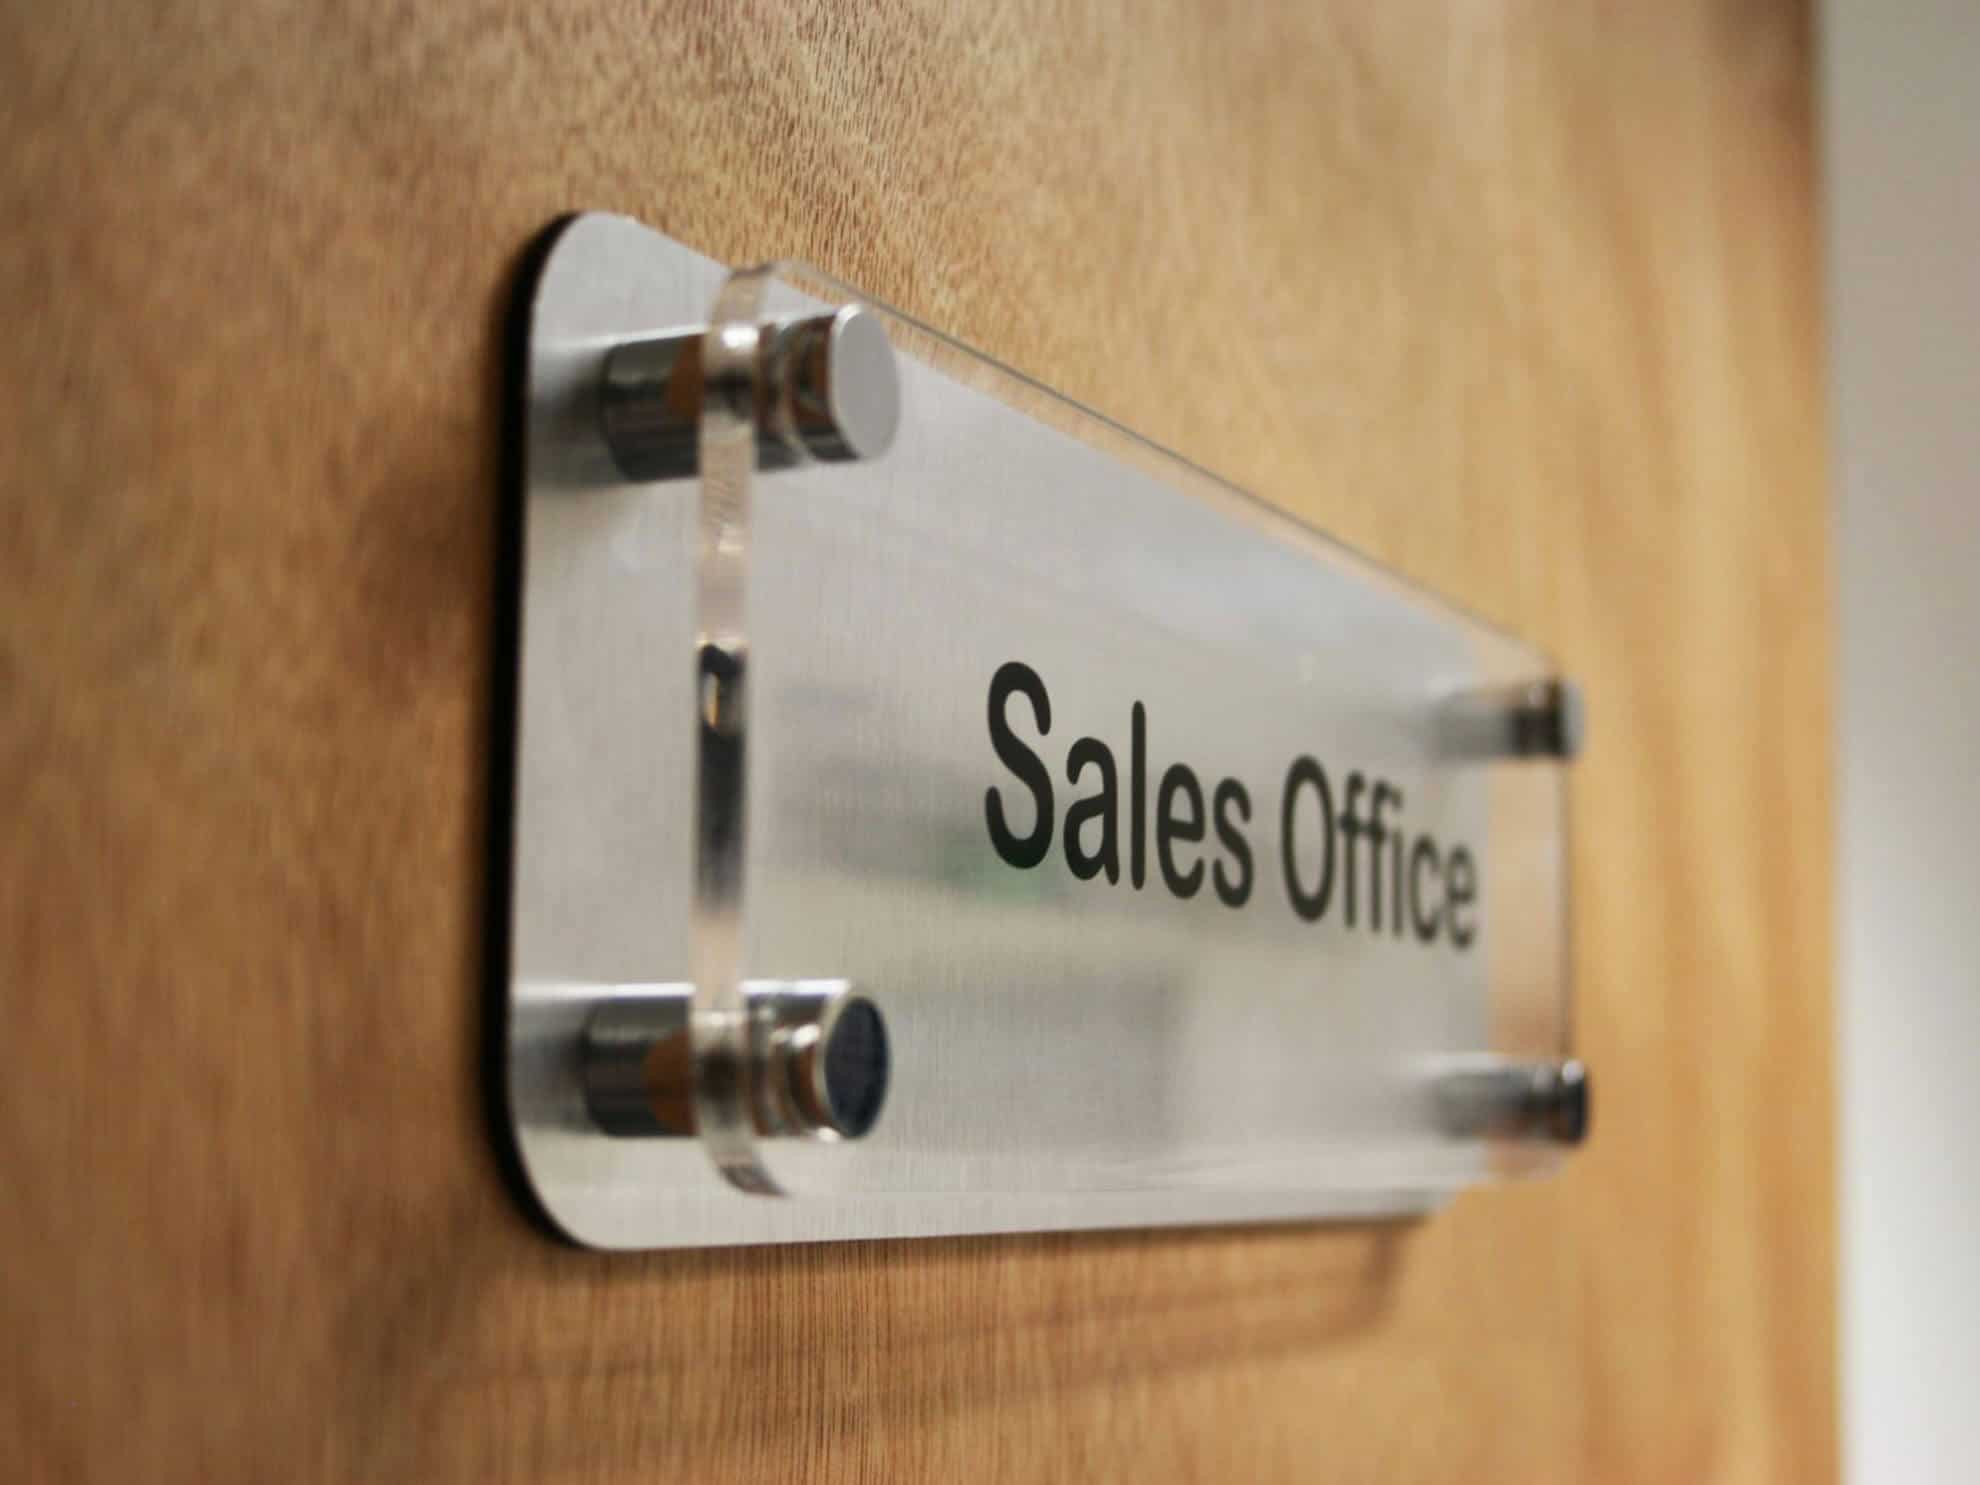 Sales Office Acrylic Door Sign 